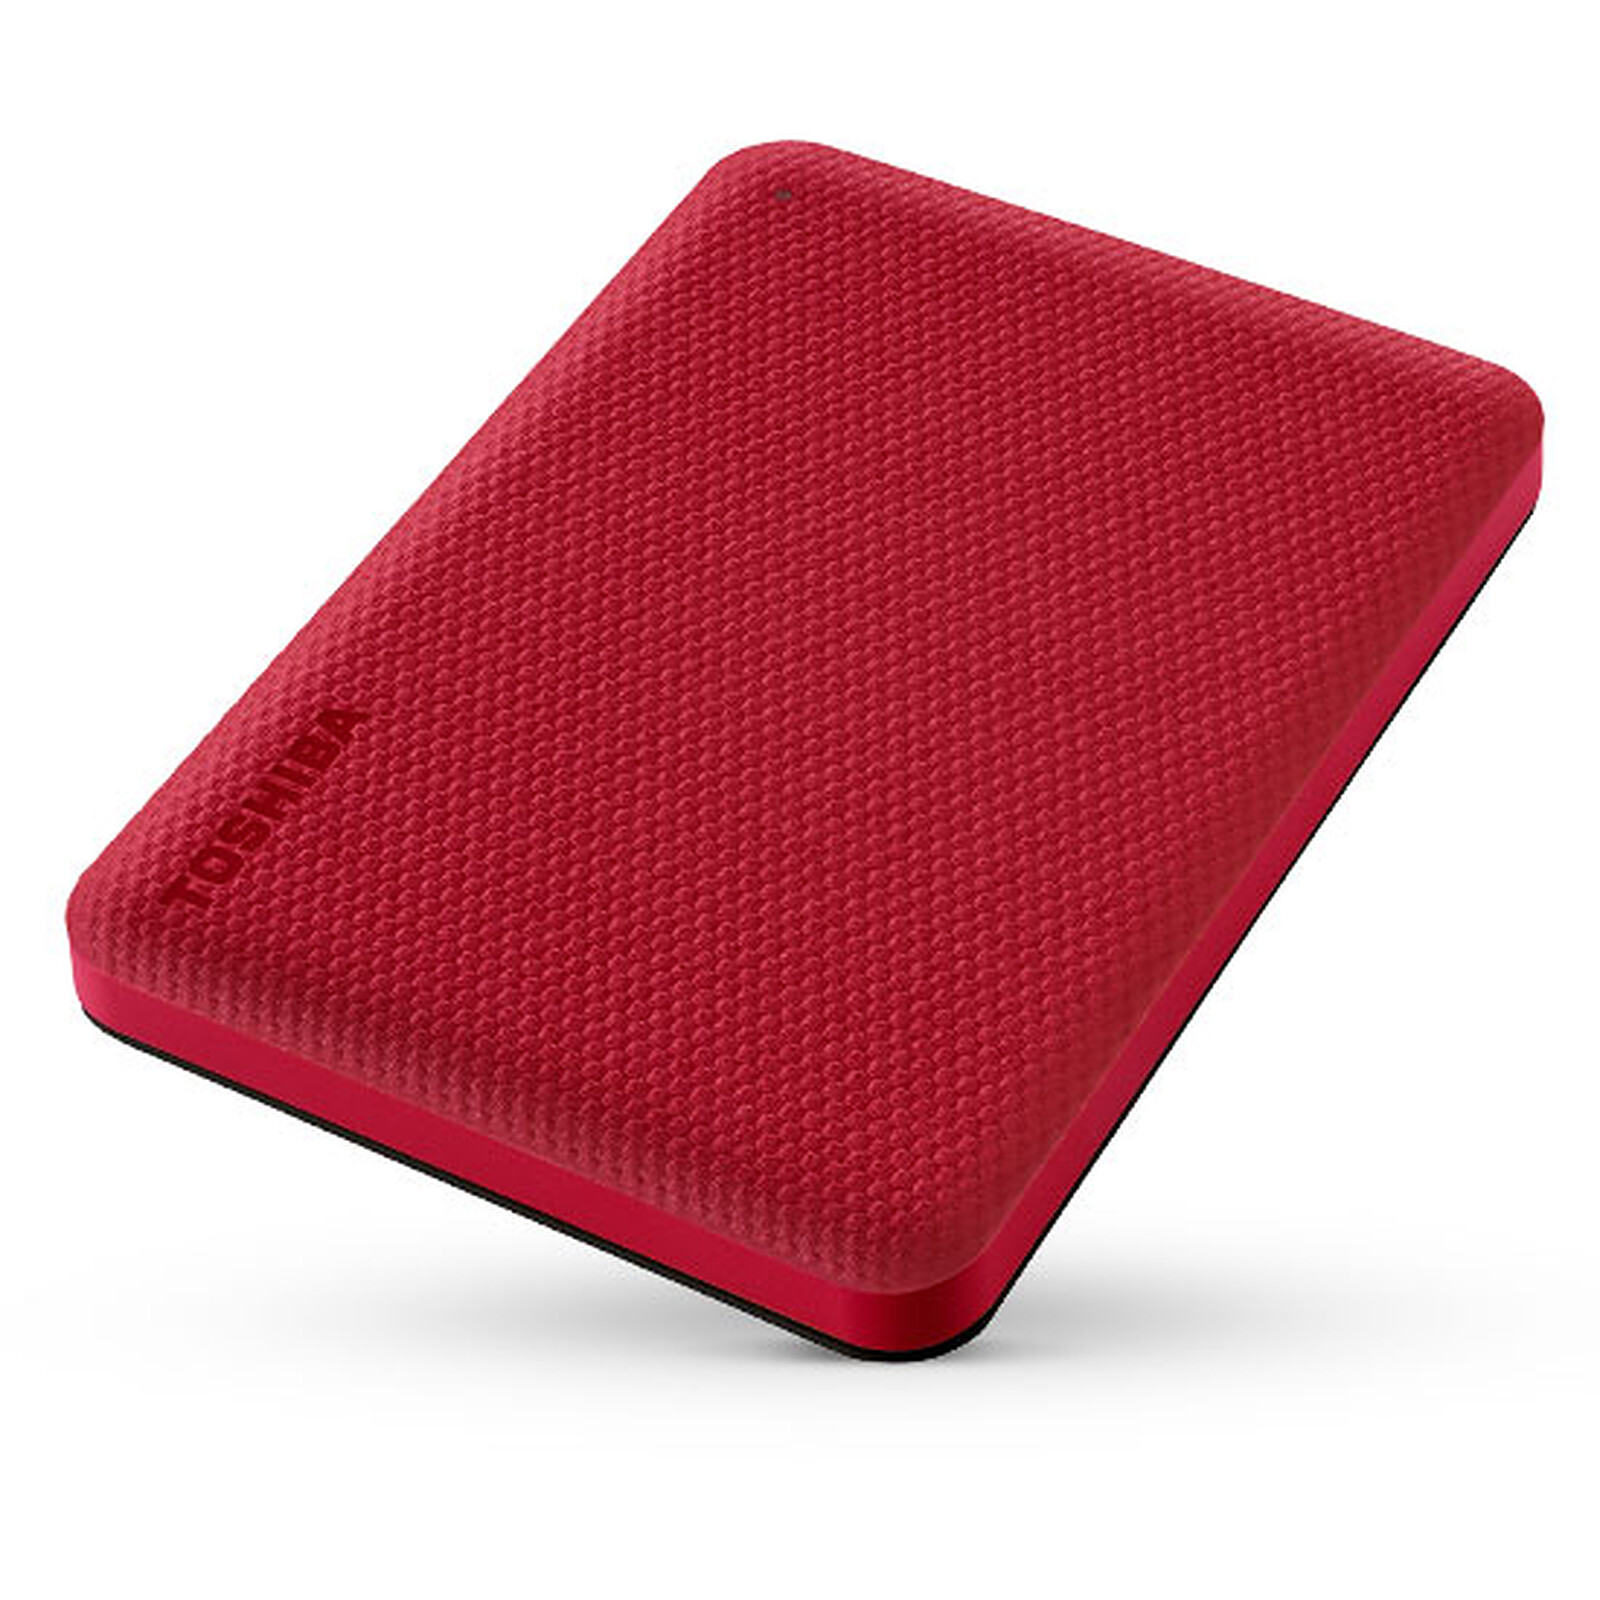 LDLC Canvio Toshiba drive - hard Red warranty - External 2Tb 3-year Advance